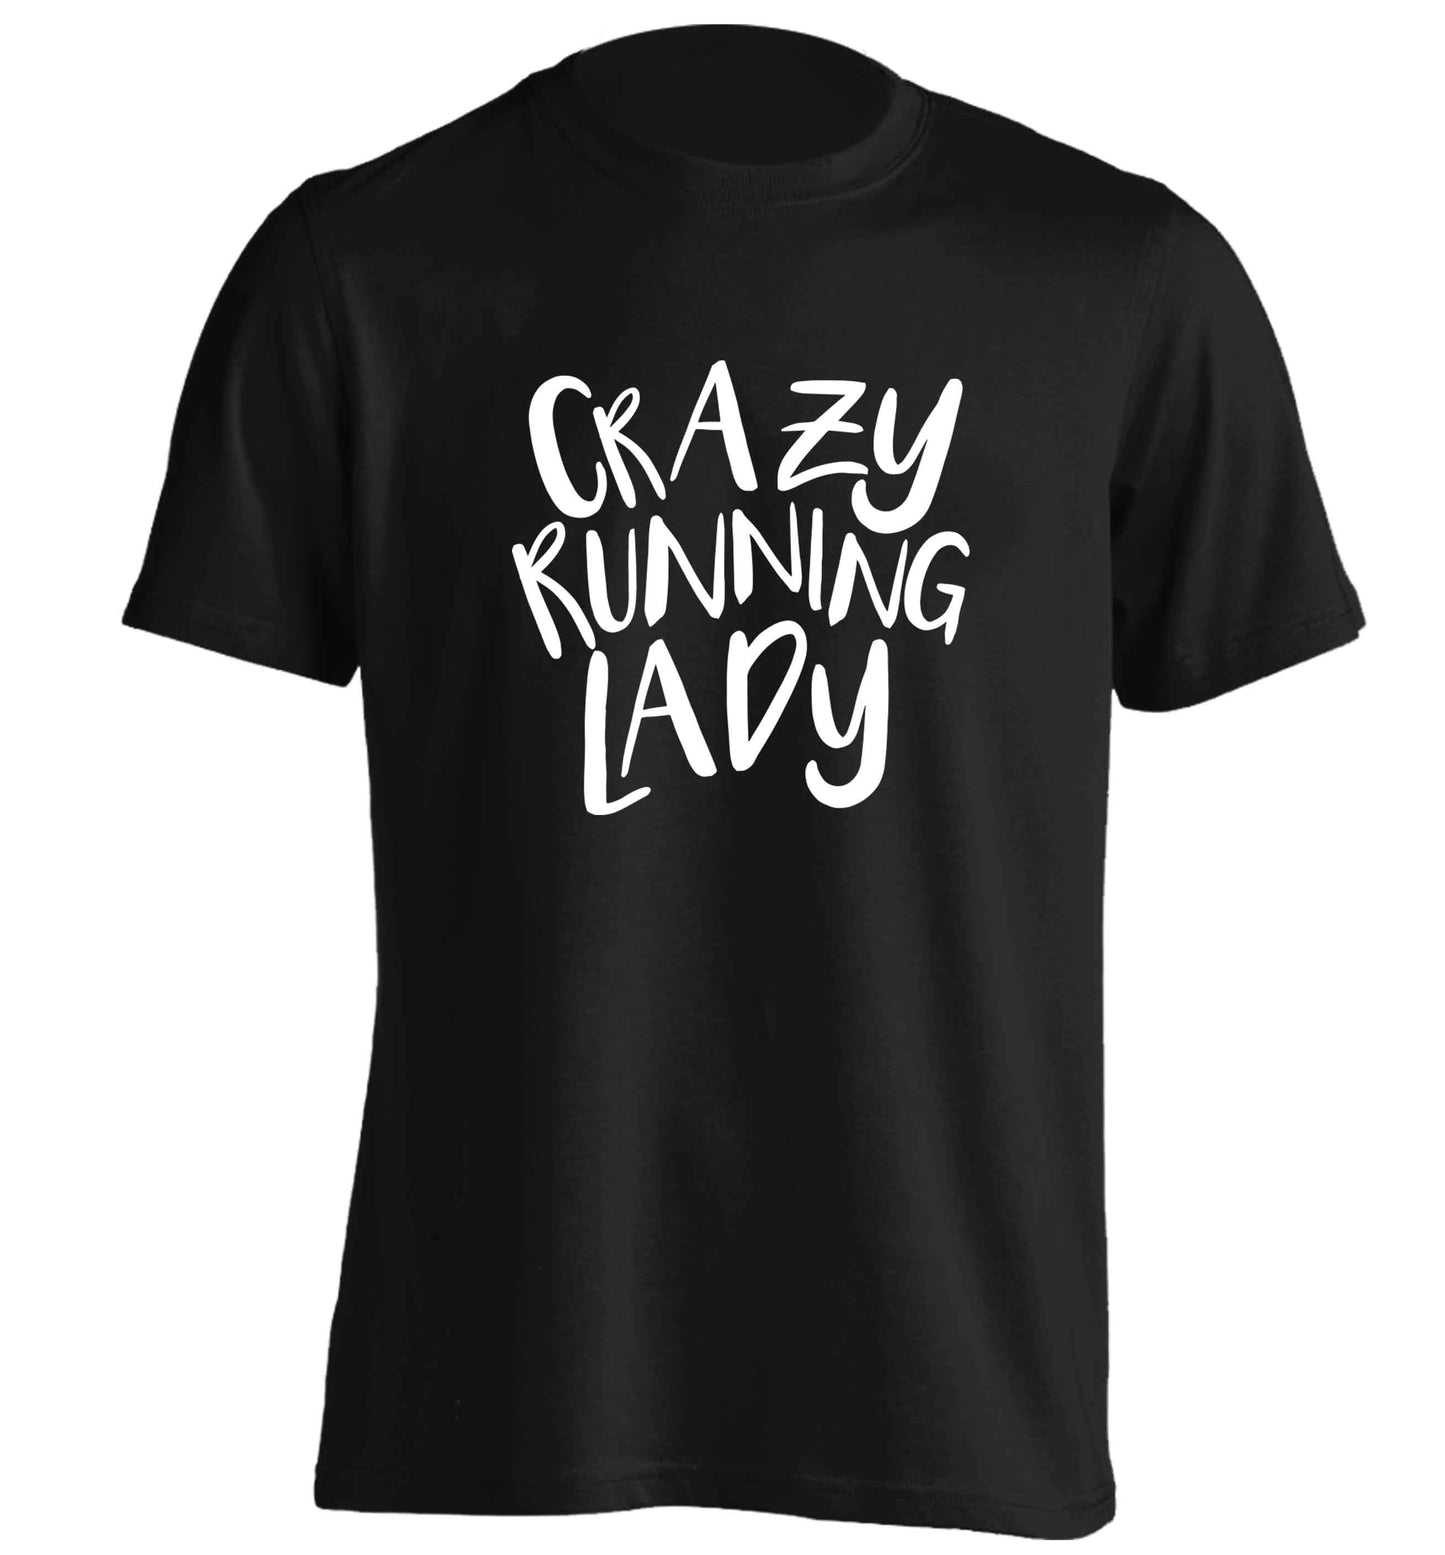 Crazy running lady adults unisex black Tshirt 2XL